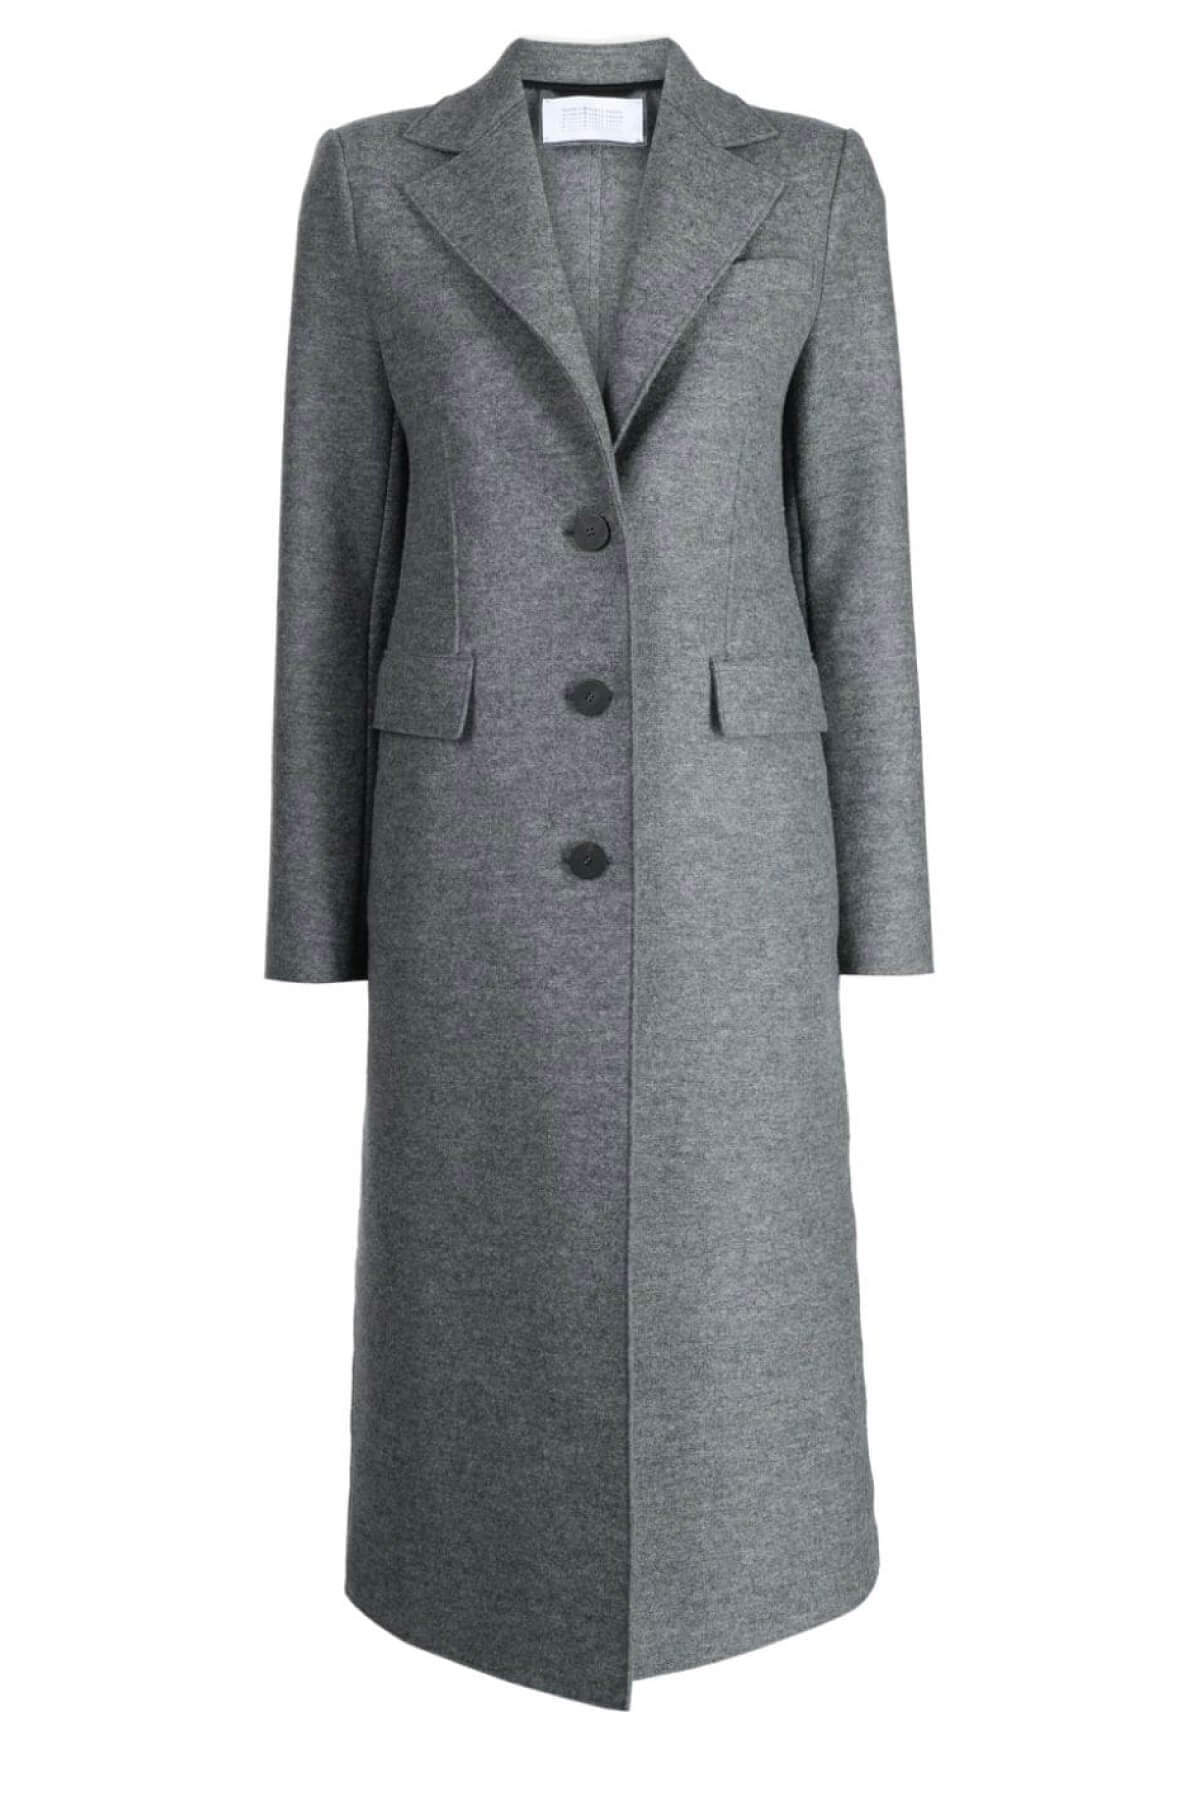 Harris Wharf Single Breasted Pressed Wool Coat - Grey Mouline